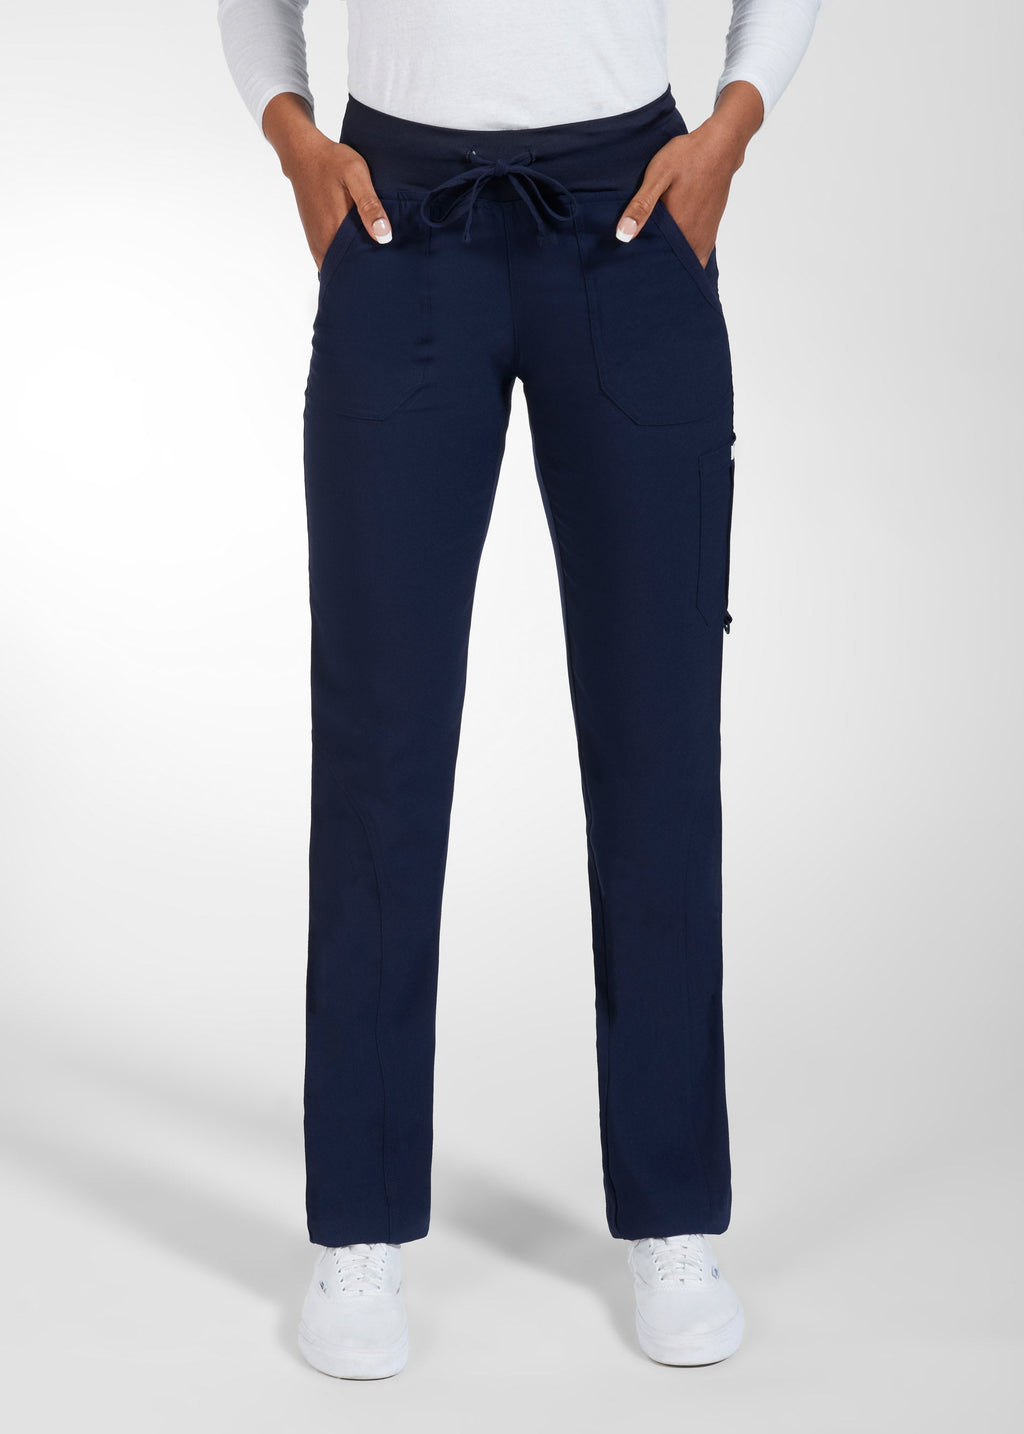 Buy Zeston Six Pocket Denim Cargo Pants for Women (26, Dark Blue) at